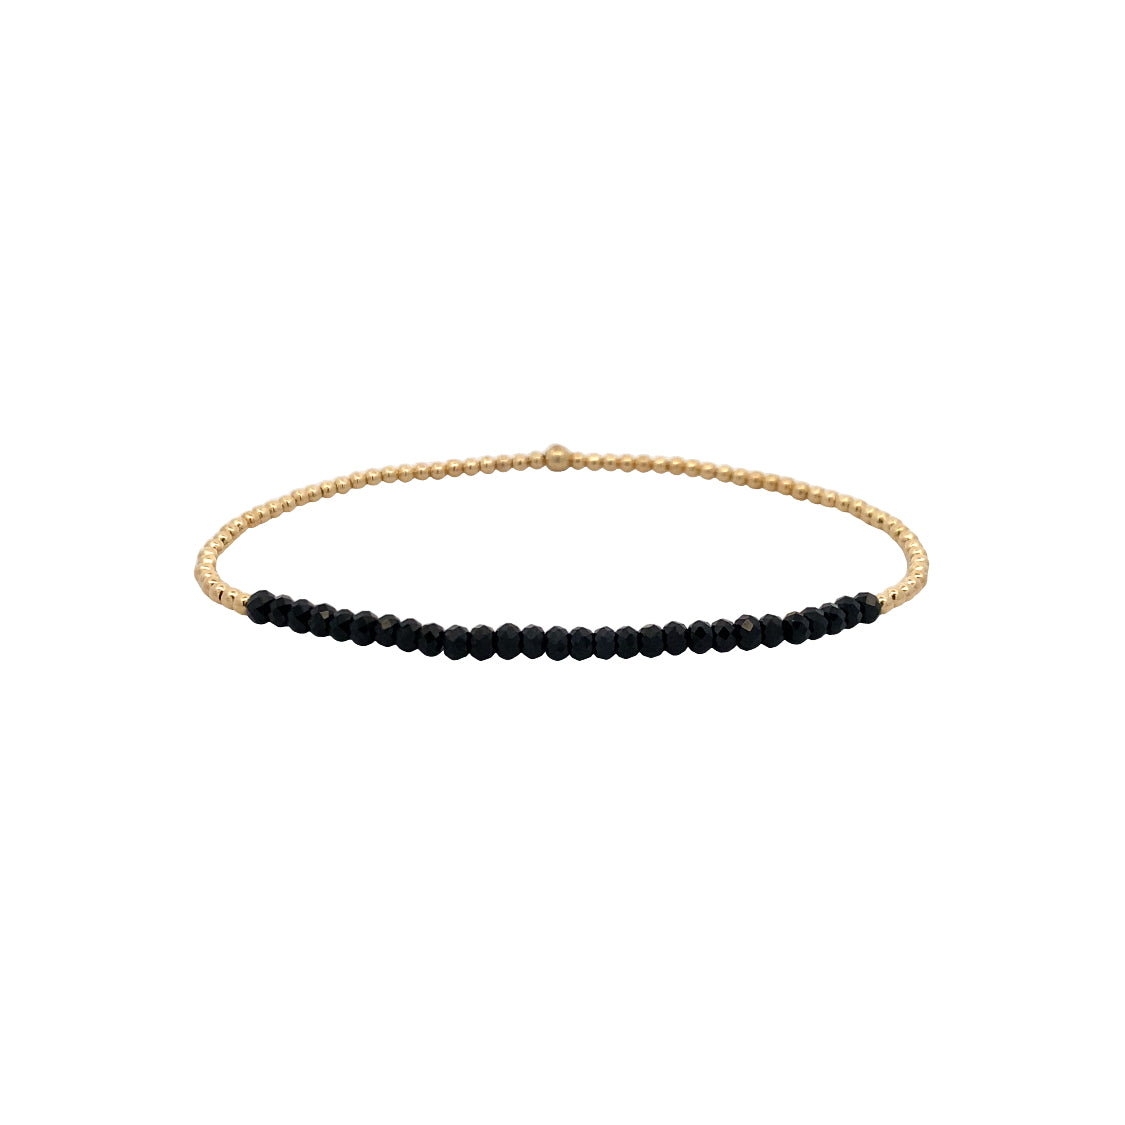 Karen Lazar DesignYellow Gold Bead Gemstone Bracelets 2YBSA700